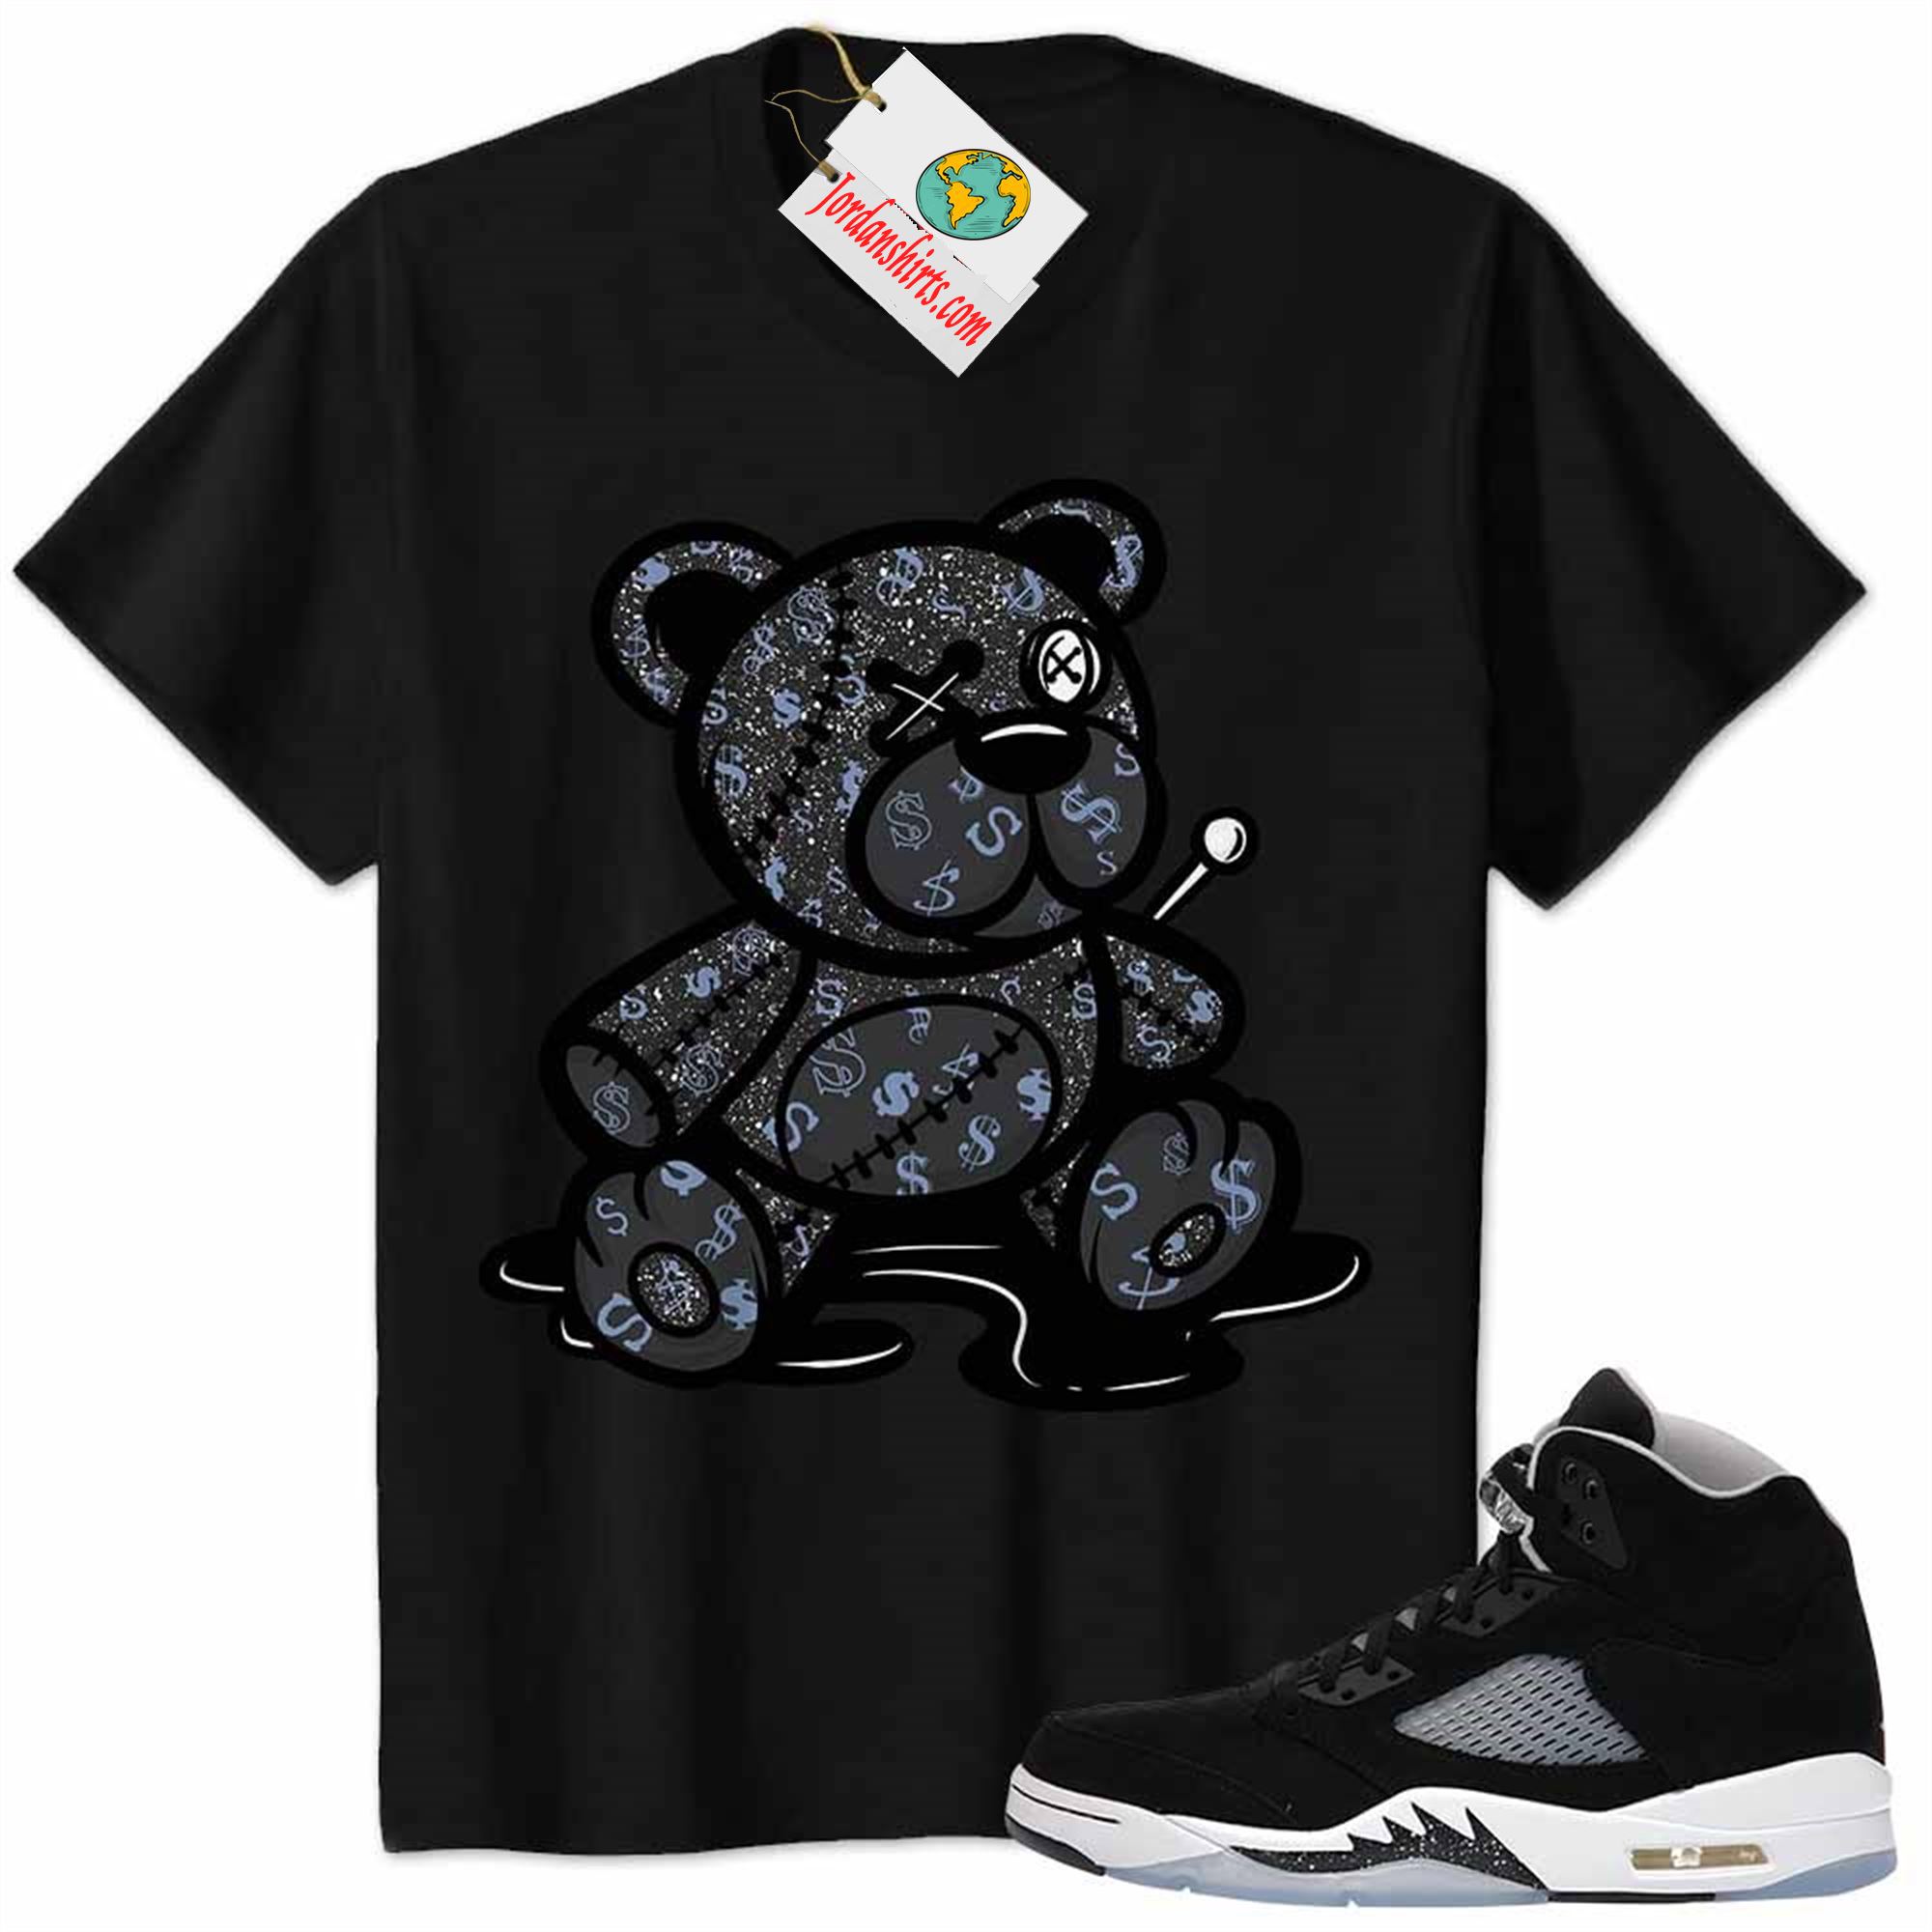 Jordan 5 Shirt, Moonlight Shirt Teddy Bear All Money In Black Full Size Up To 5xl